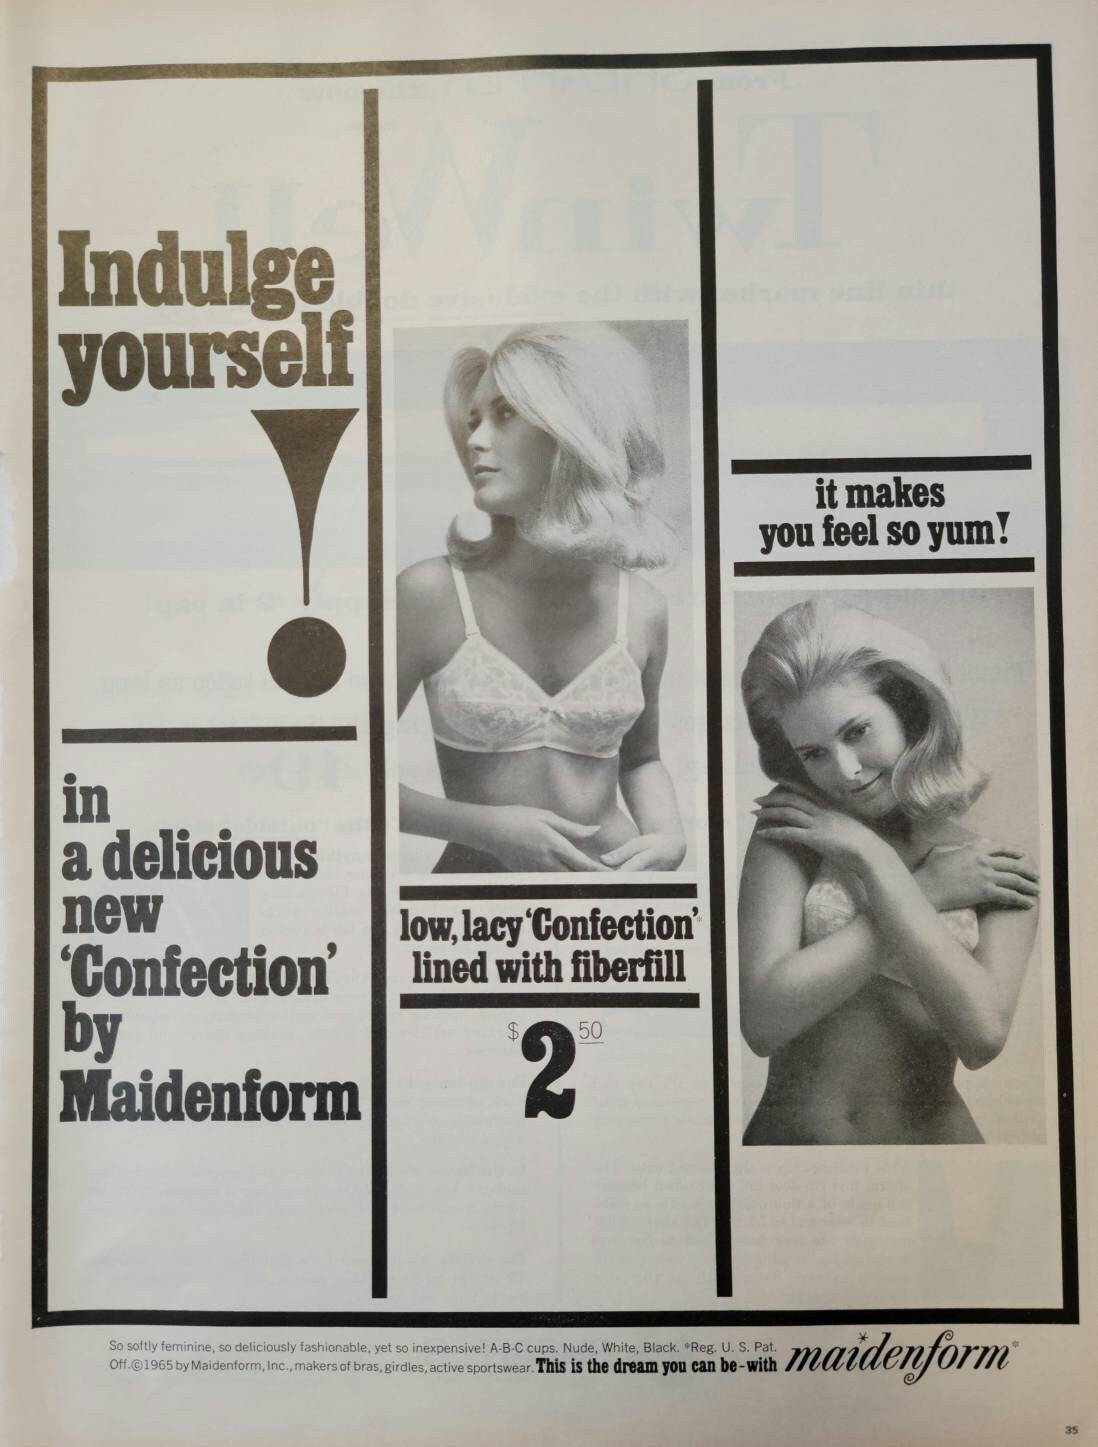 Original Vintage Lingerie Ad for 1962 Maidenform's New Concertina